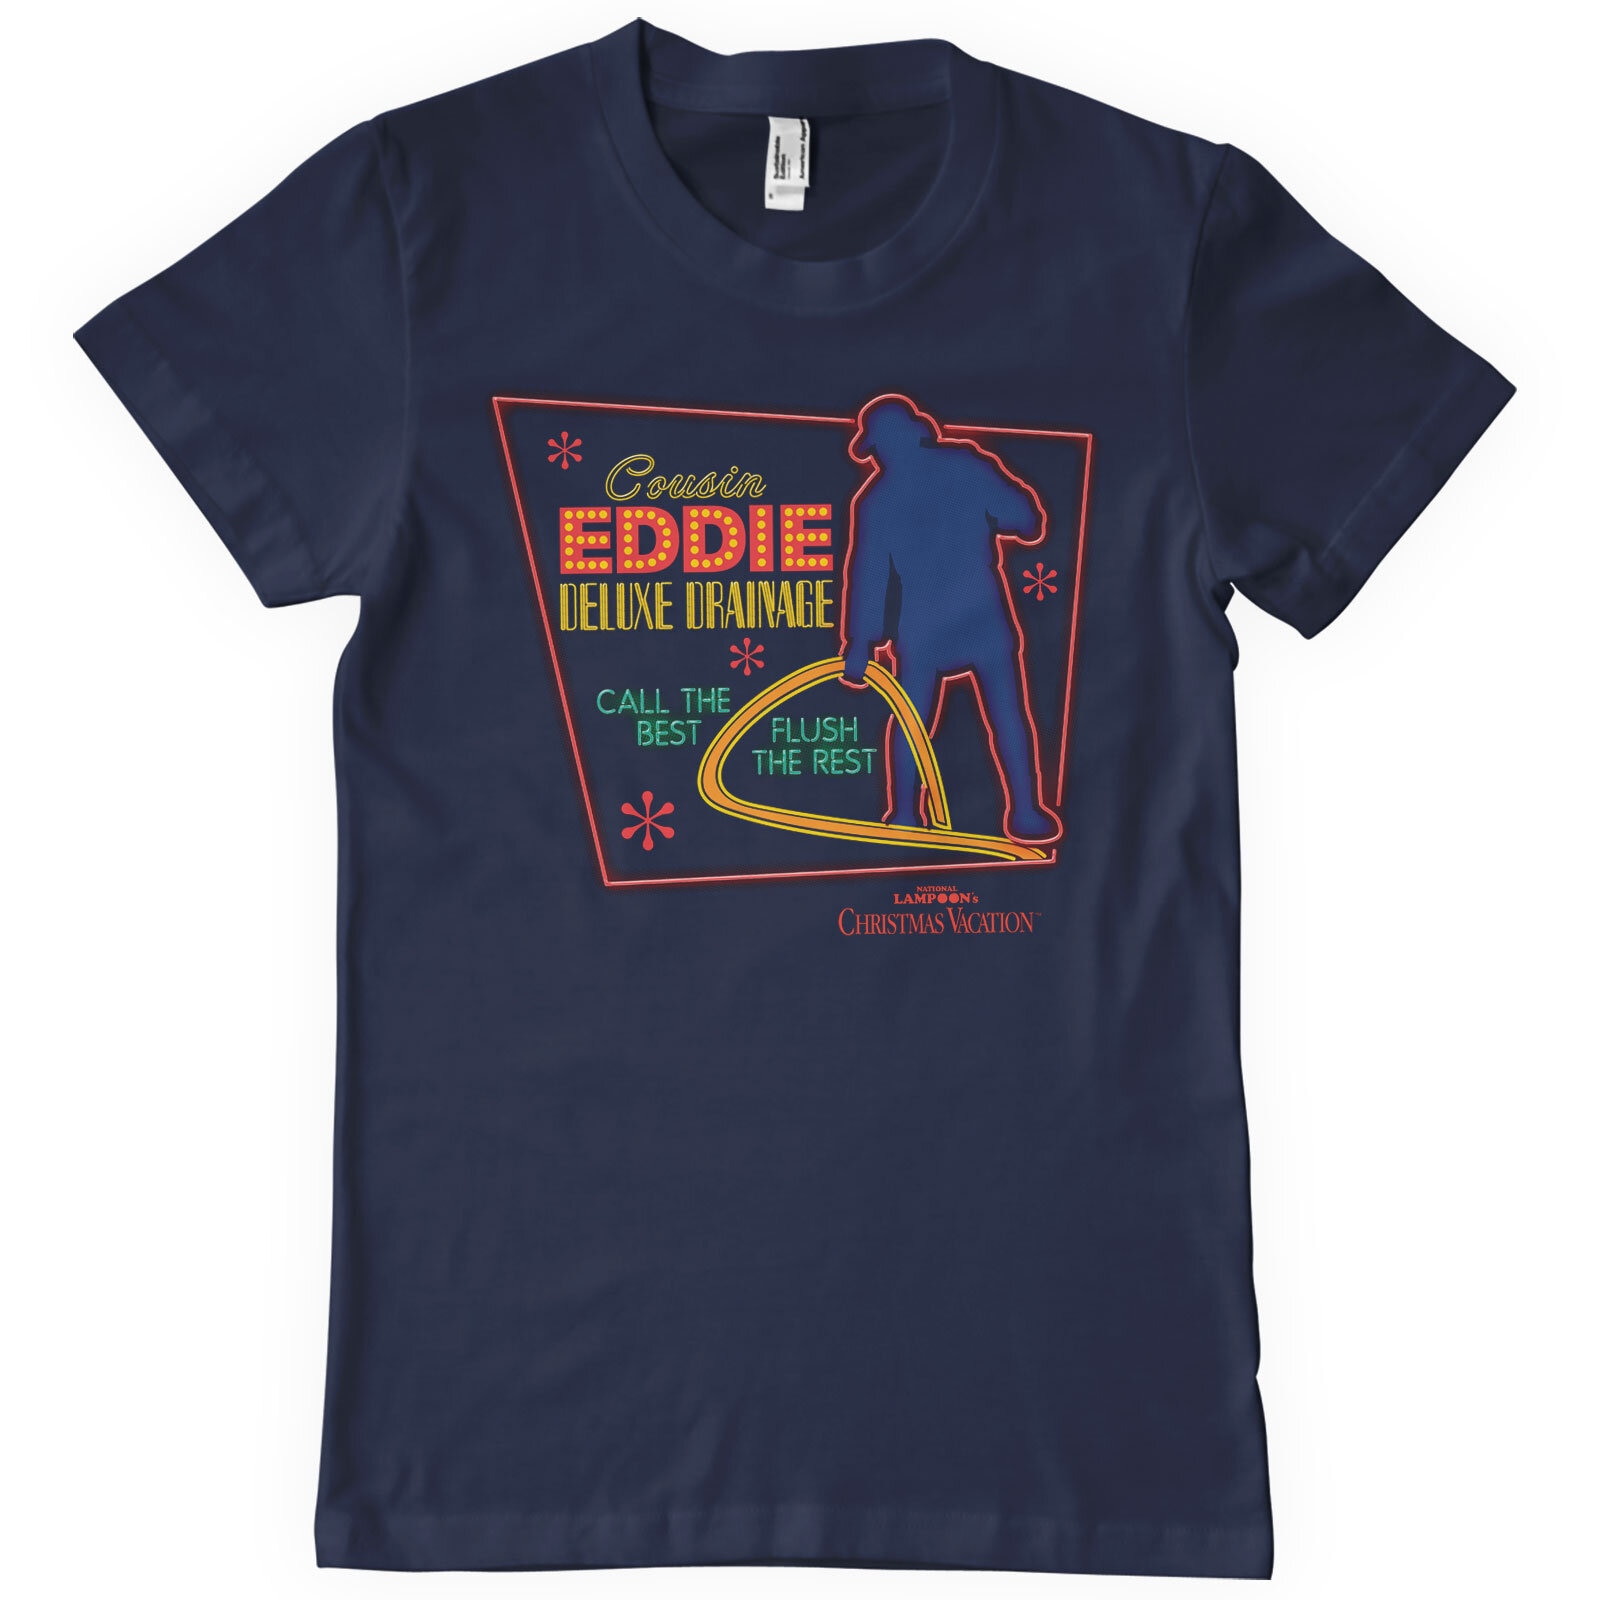 Cousin Eddie Deluxe Drainage T-Shirt